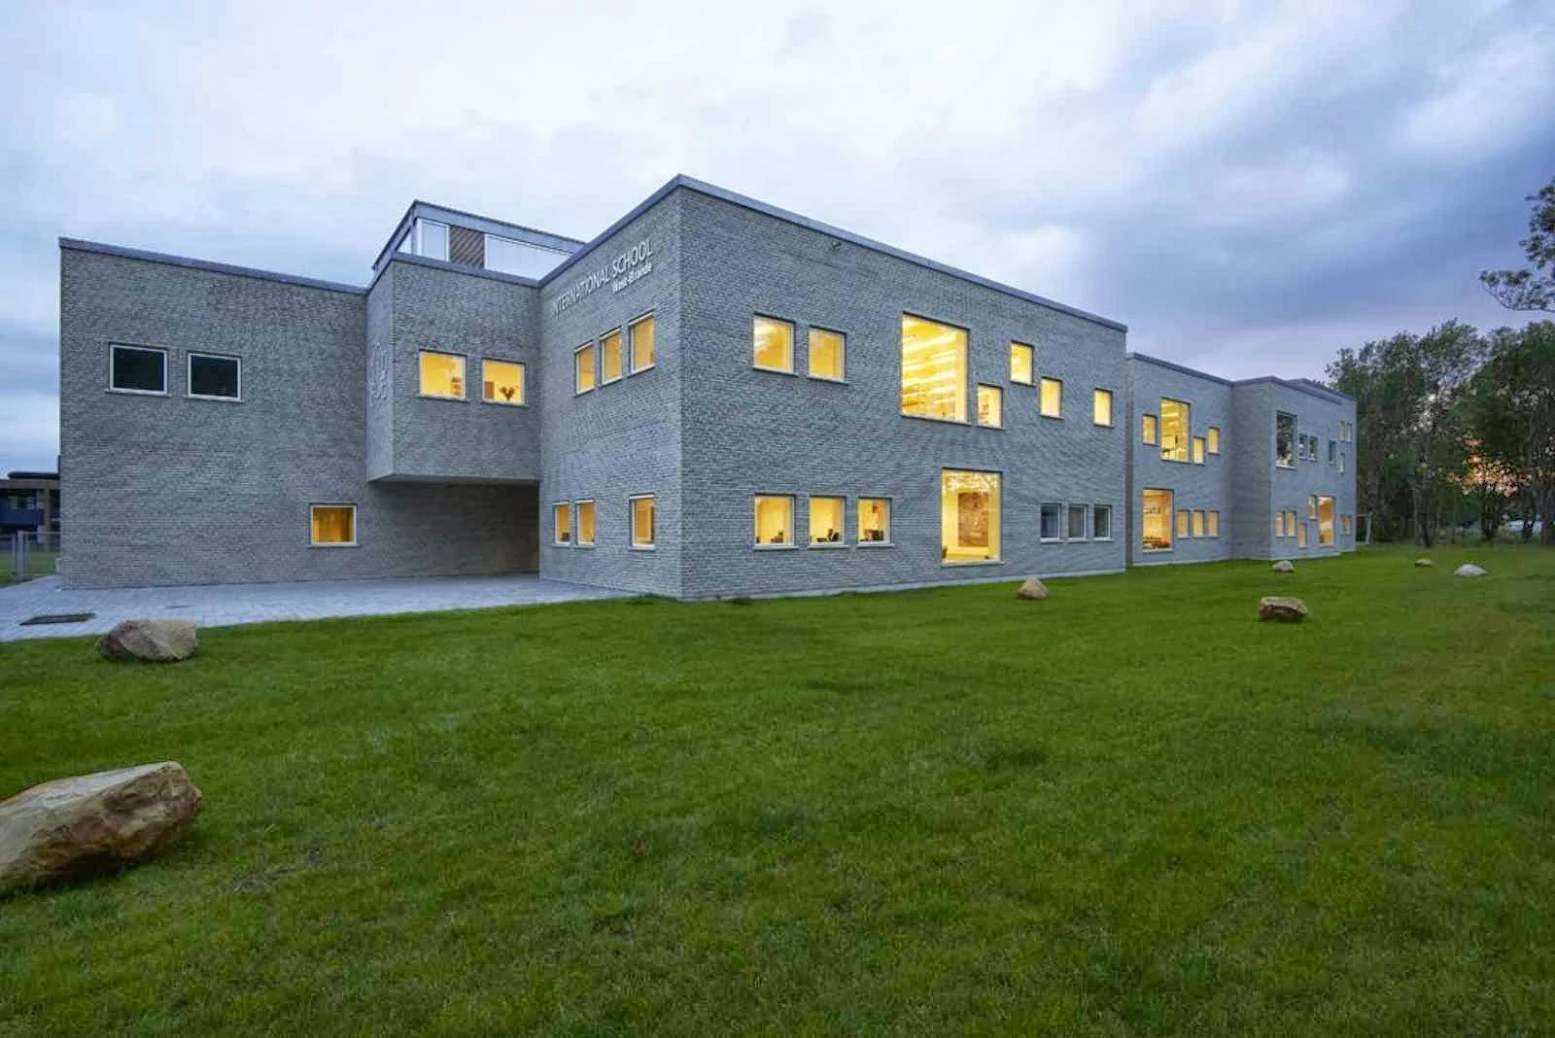 04-International-School-Ikast-Brande-by-C.F.-Møller-Architects